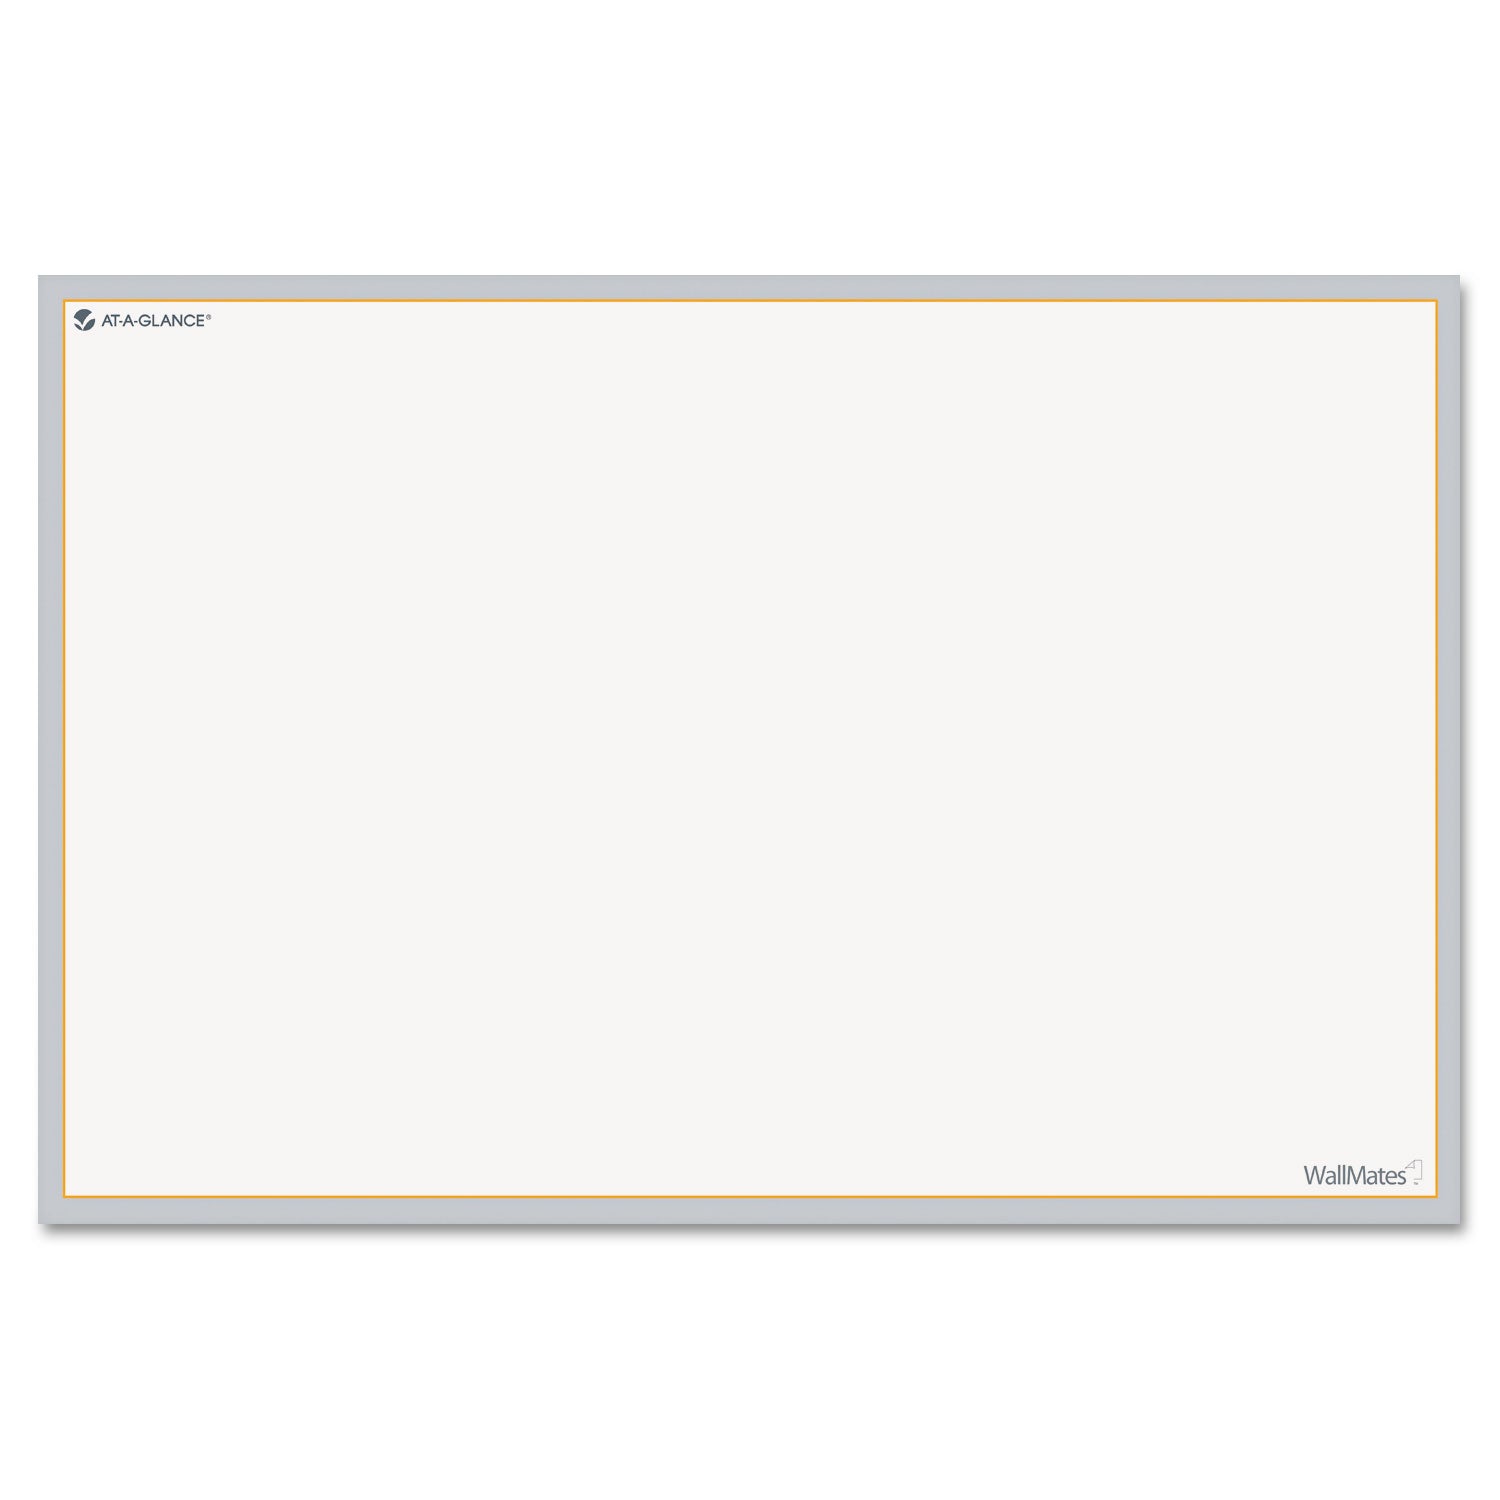 WallMates Self-Adhesive Dry Erase Writing/Planning Surface, 36 x 24, White/Gray/Orange Sheets, Undated - 